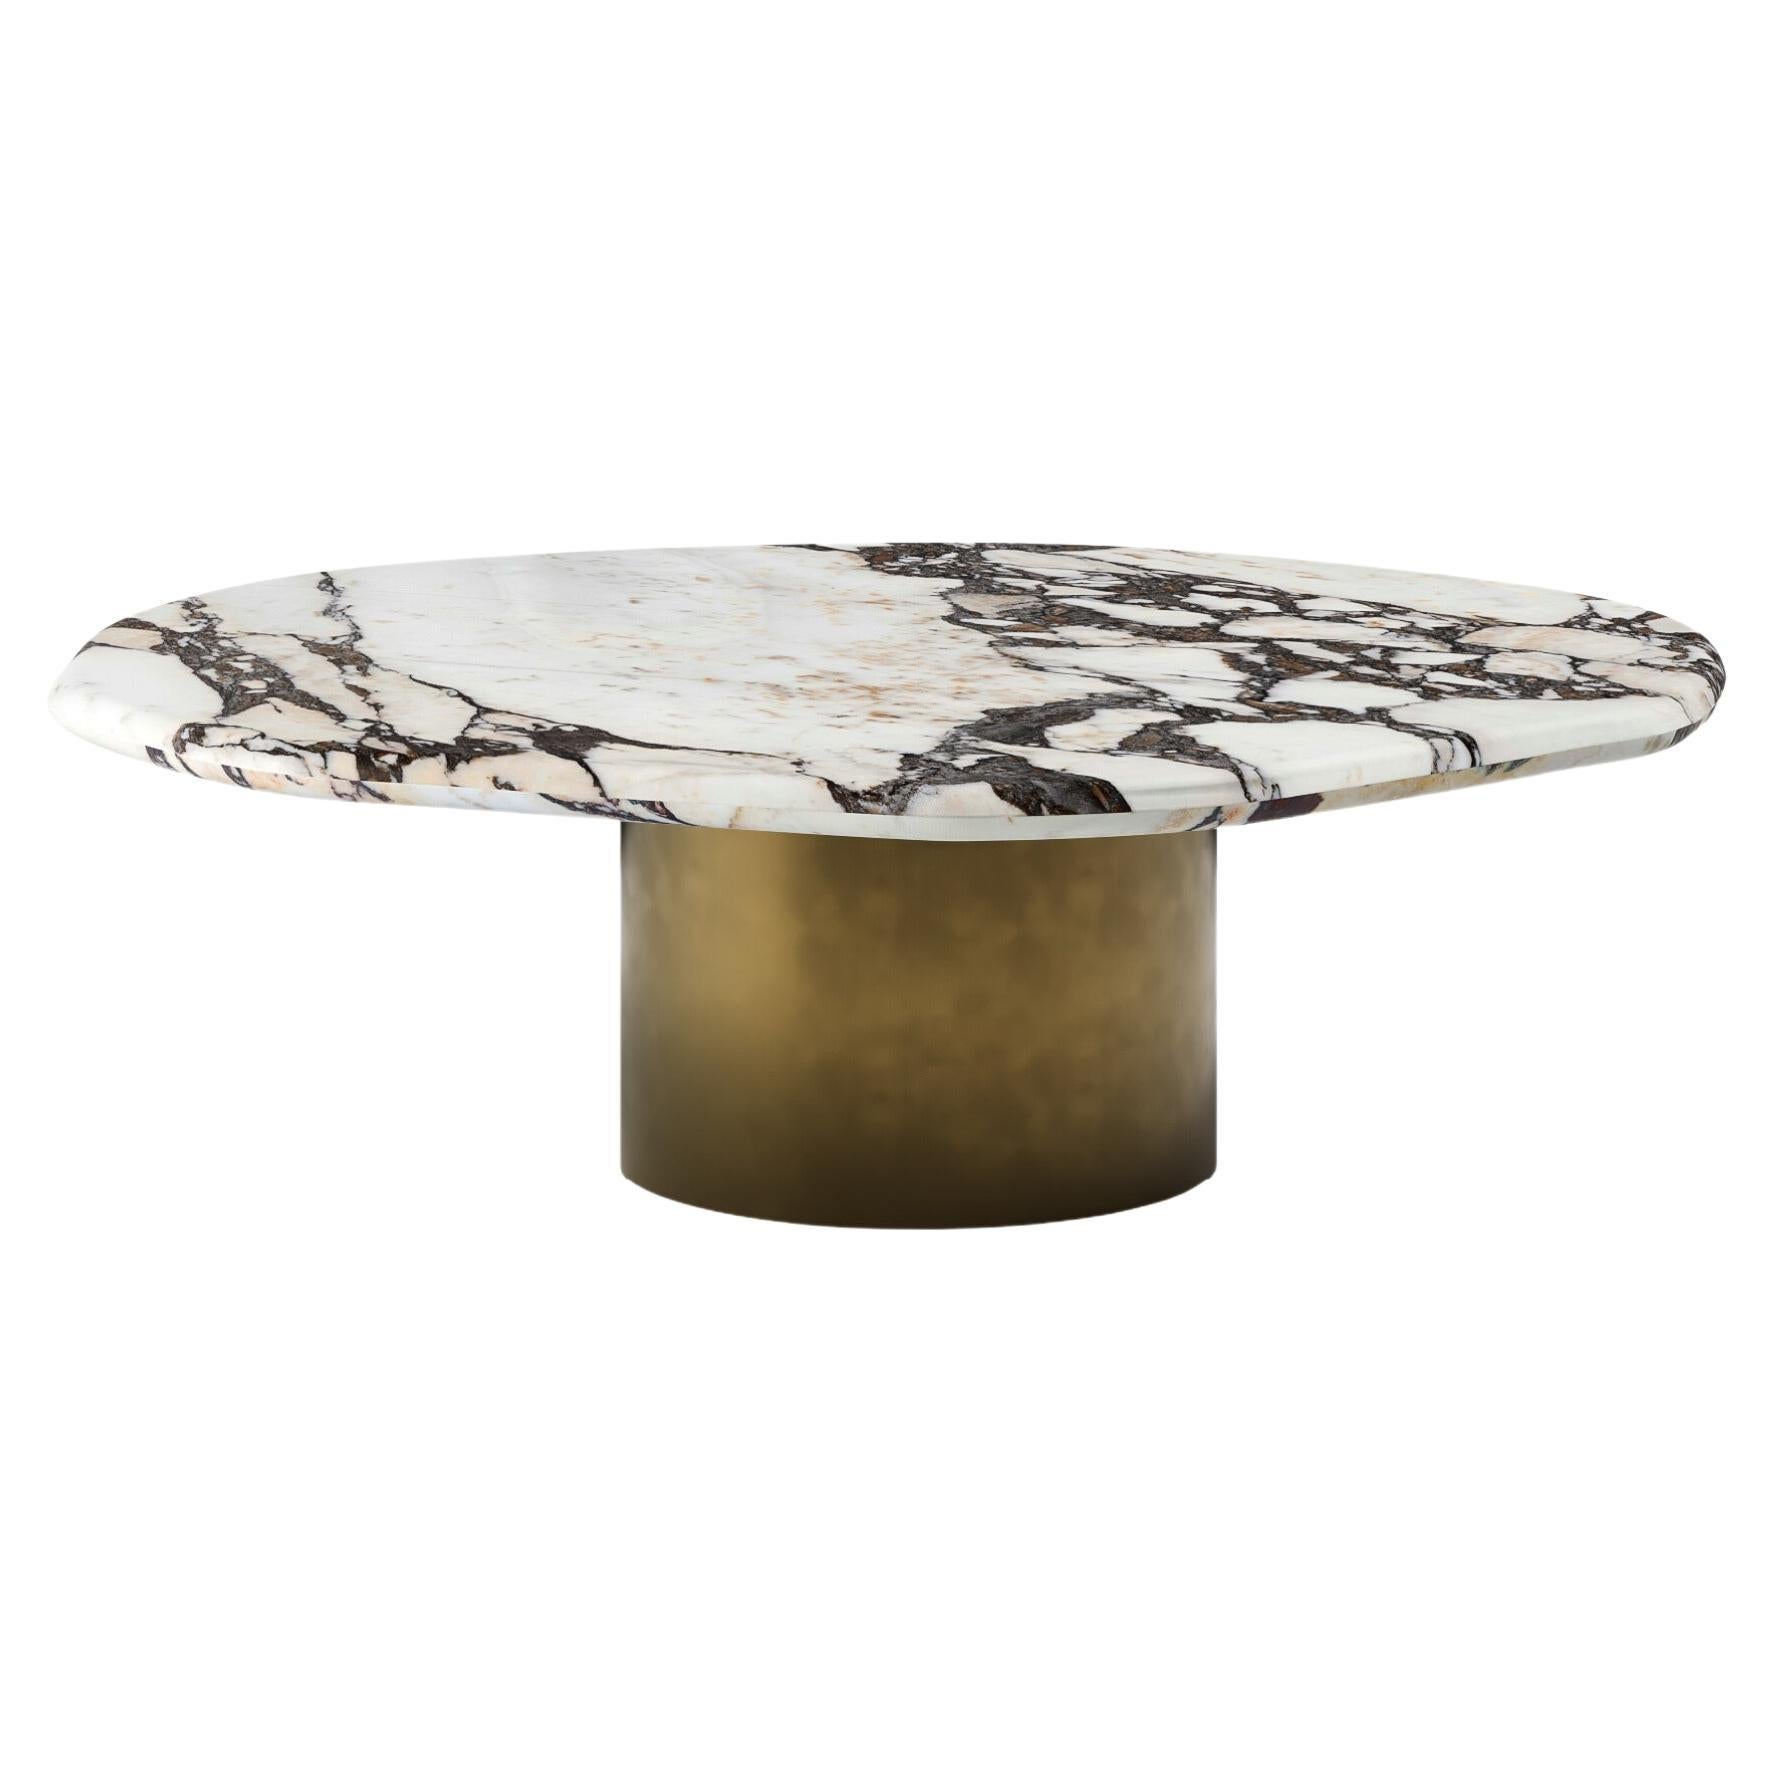 FORM(LA) Lago Round Coffee Table 54”L x 54”W x 14”H Viola Marble & Bronze  For Sale